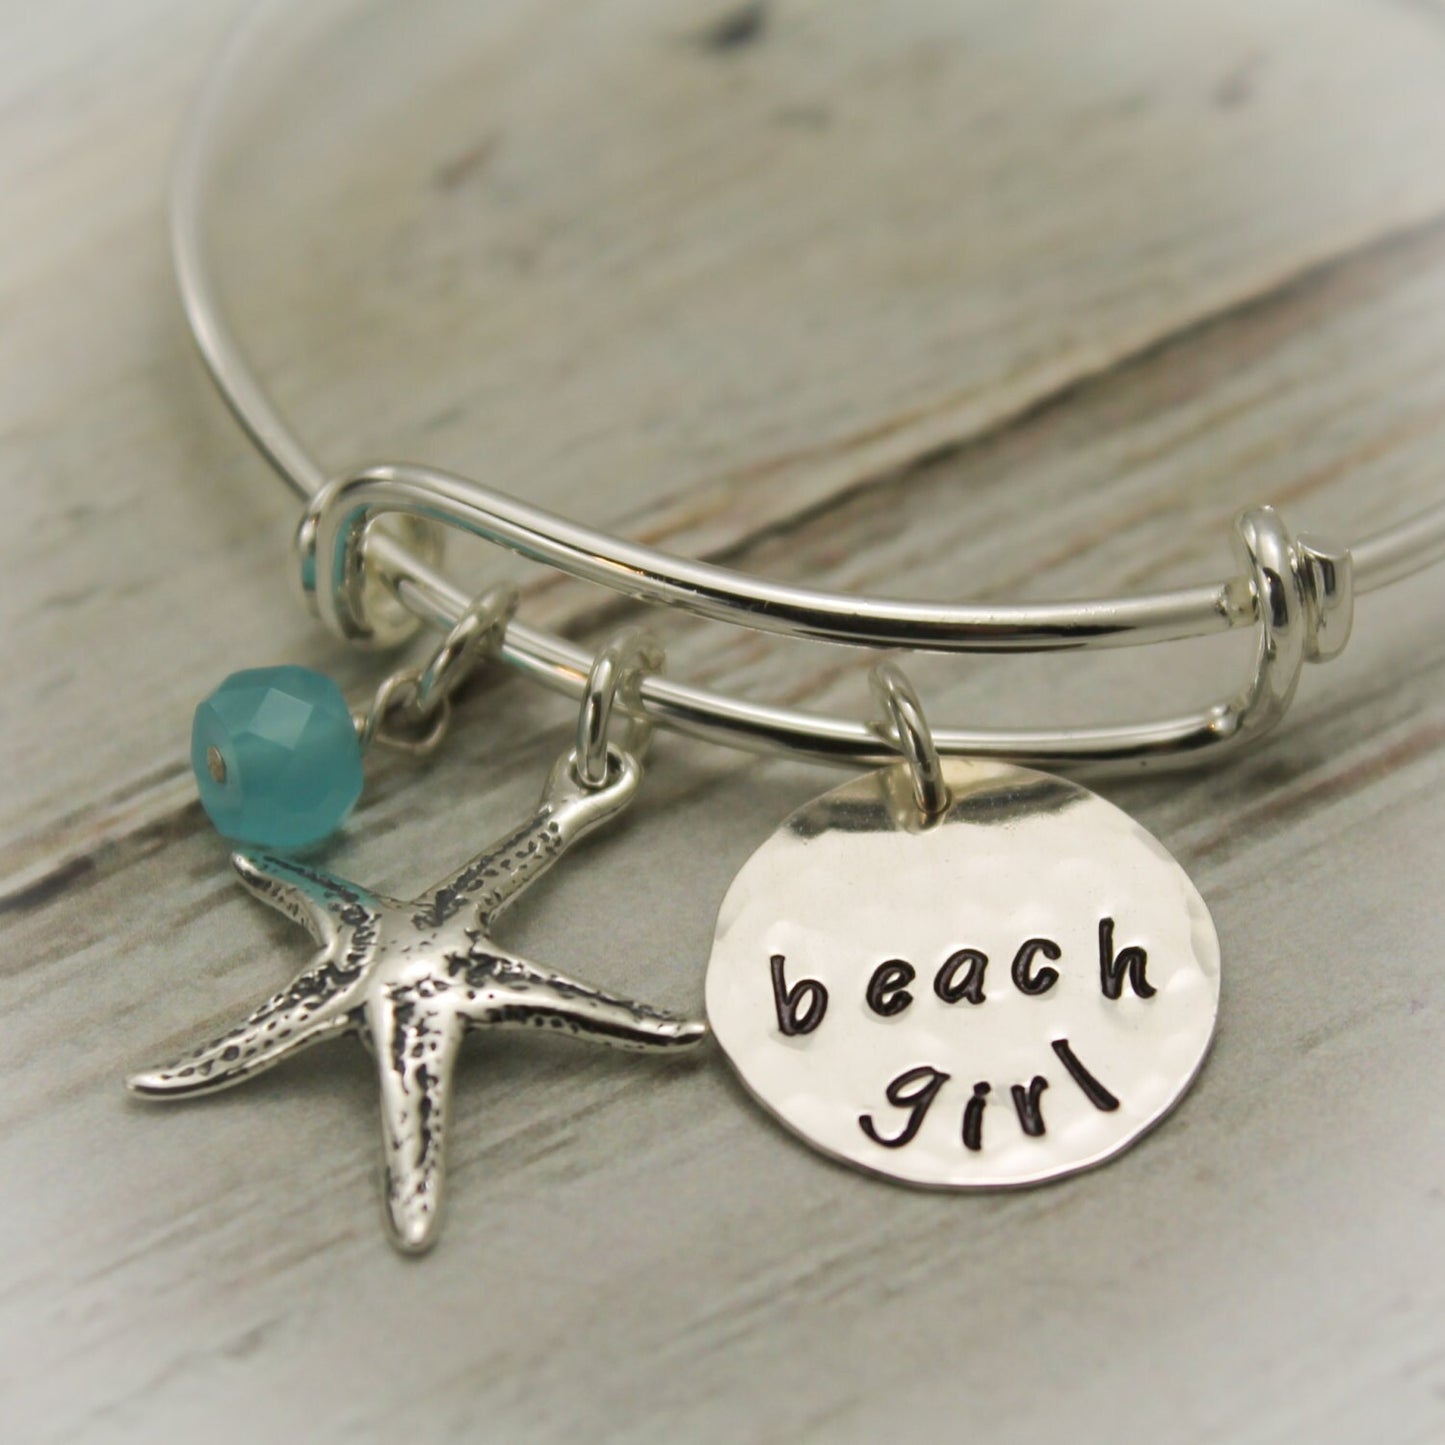 Beach Girl Bangle, Starfish Bracelet, Beach Jewelry, Vacation Jewelry, Cruise Wear, Personalized Hand Stamped Jewelry